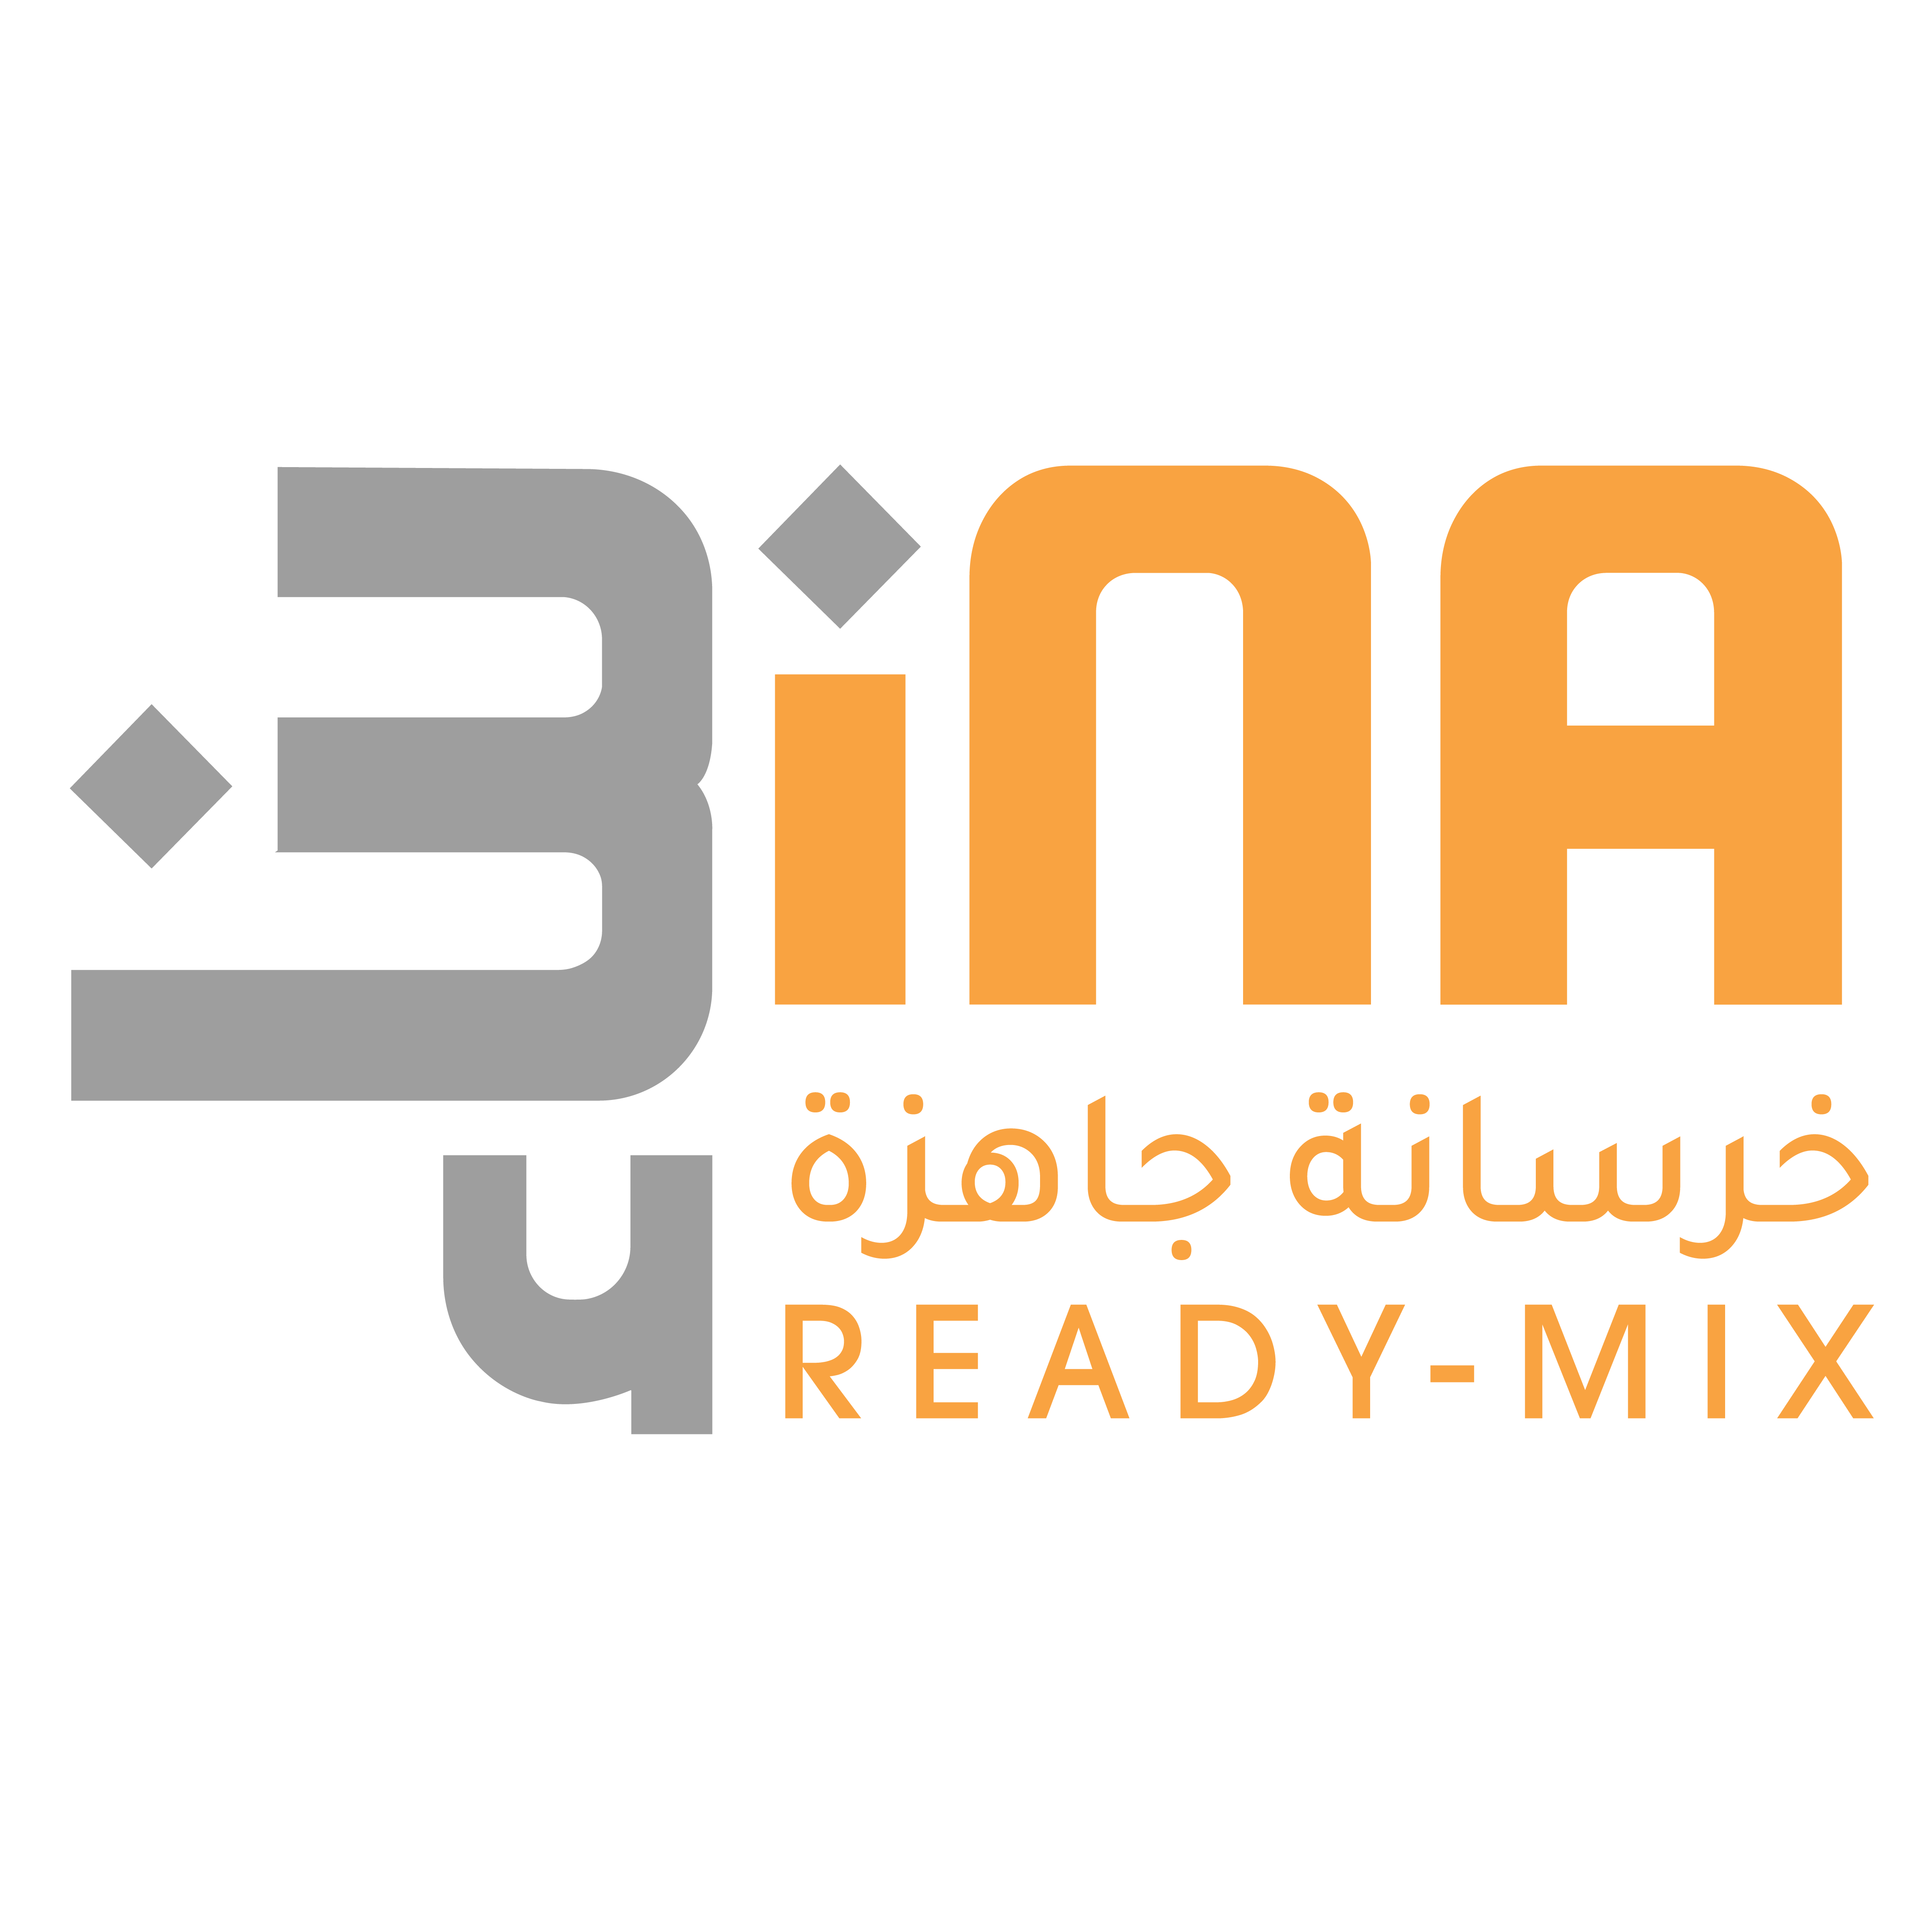 Bina ReadyMix